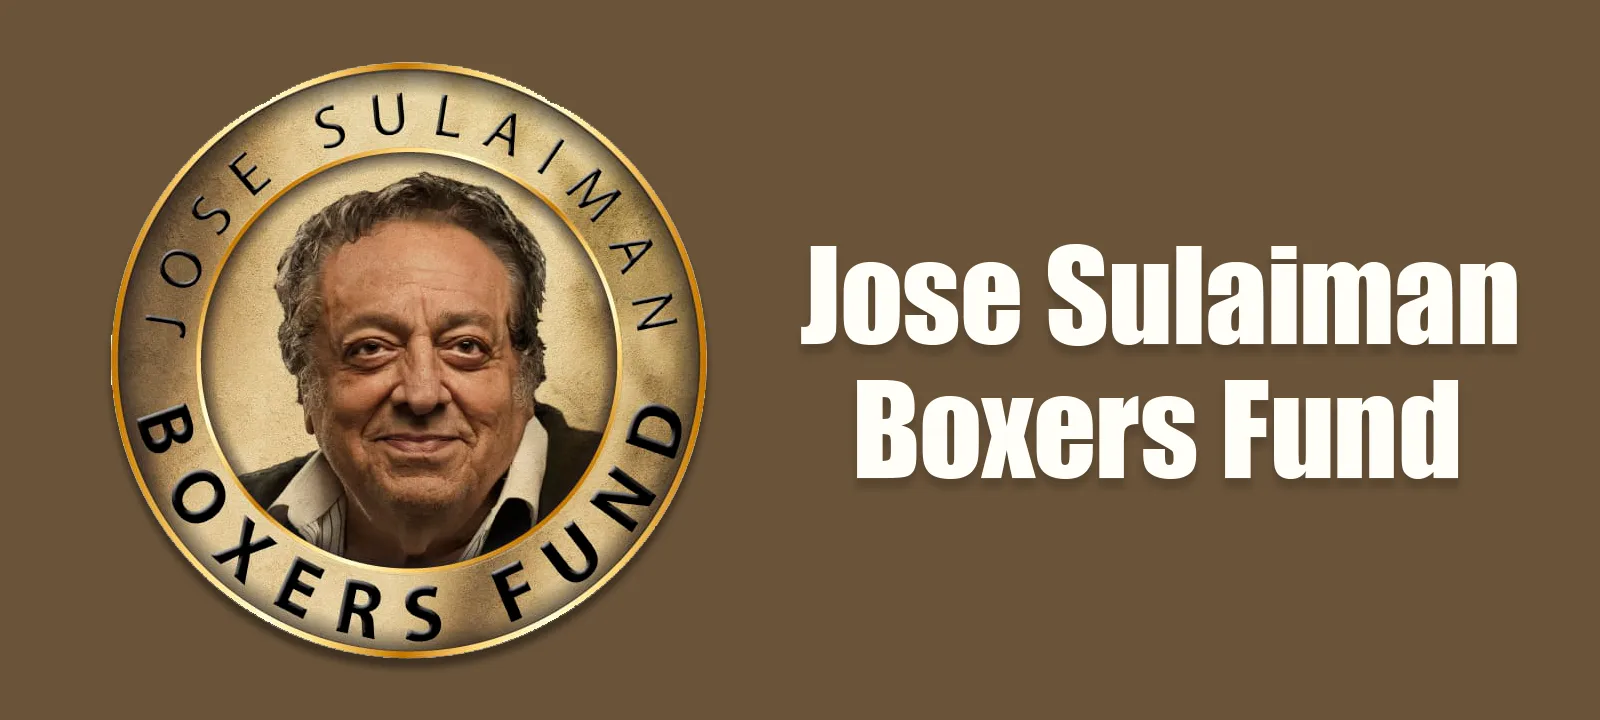 Jose Sulaiman Boxers Fund – Mission Statement